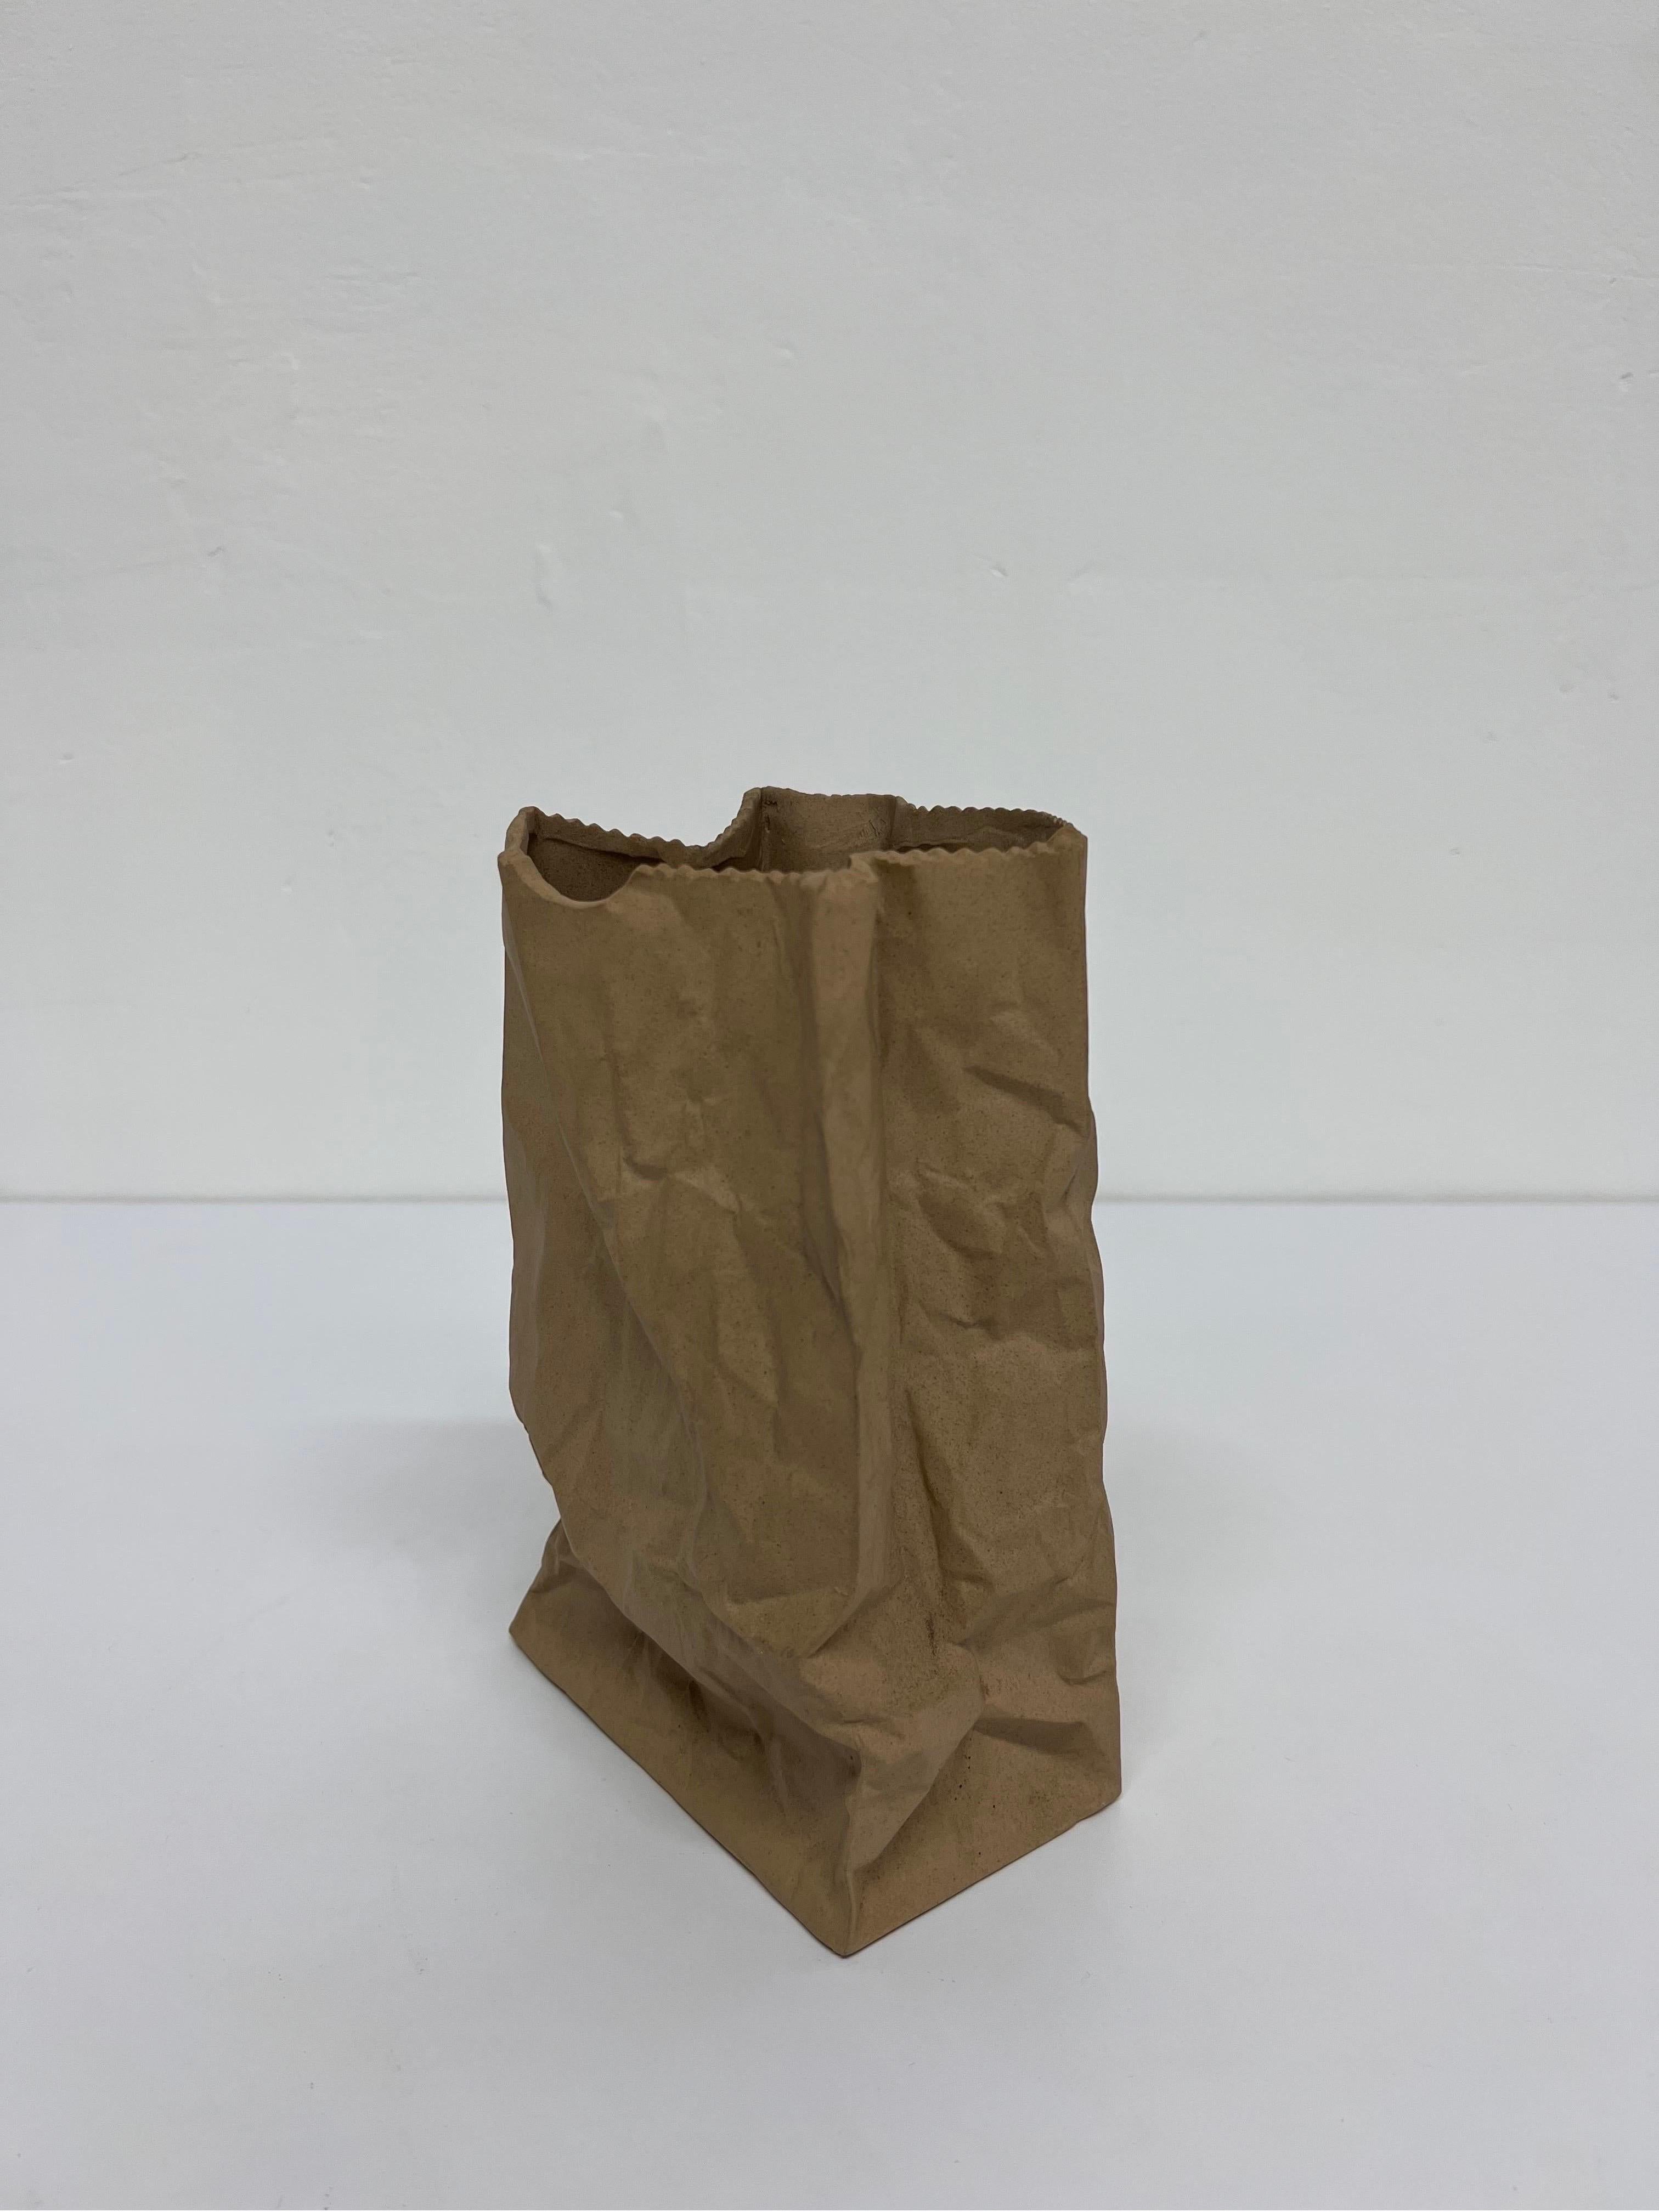 20th Century Pop Art Porcelain Brown Paper Bag Vase Sculpture by Hawaii's Ceramic Art Studio